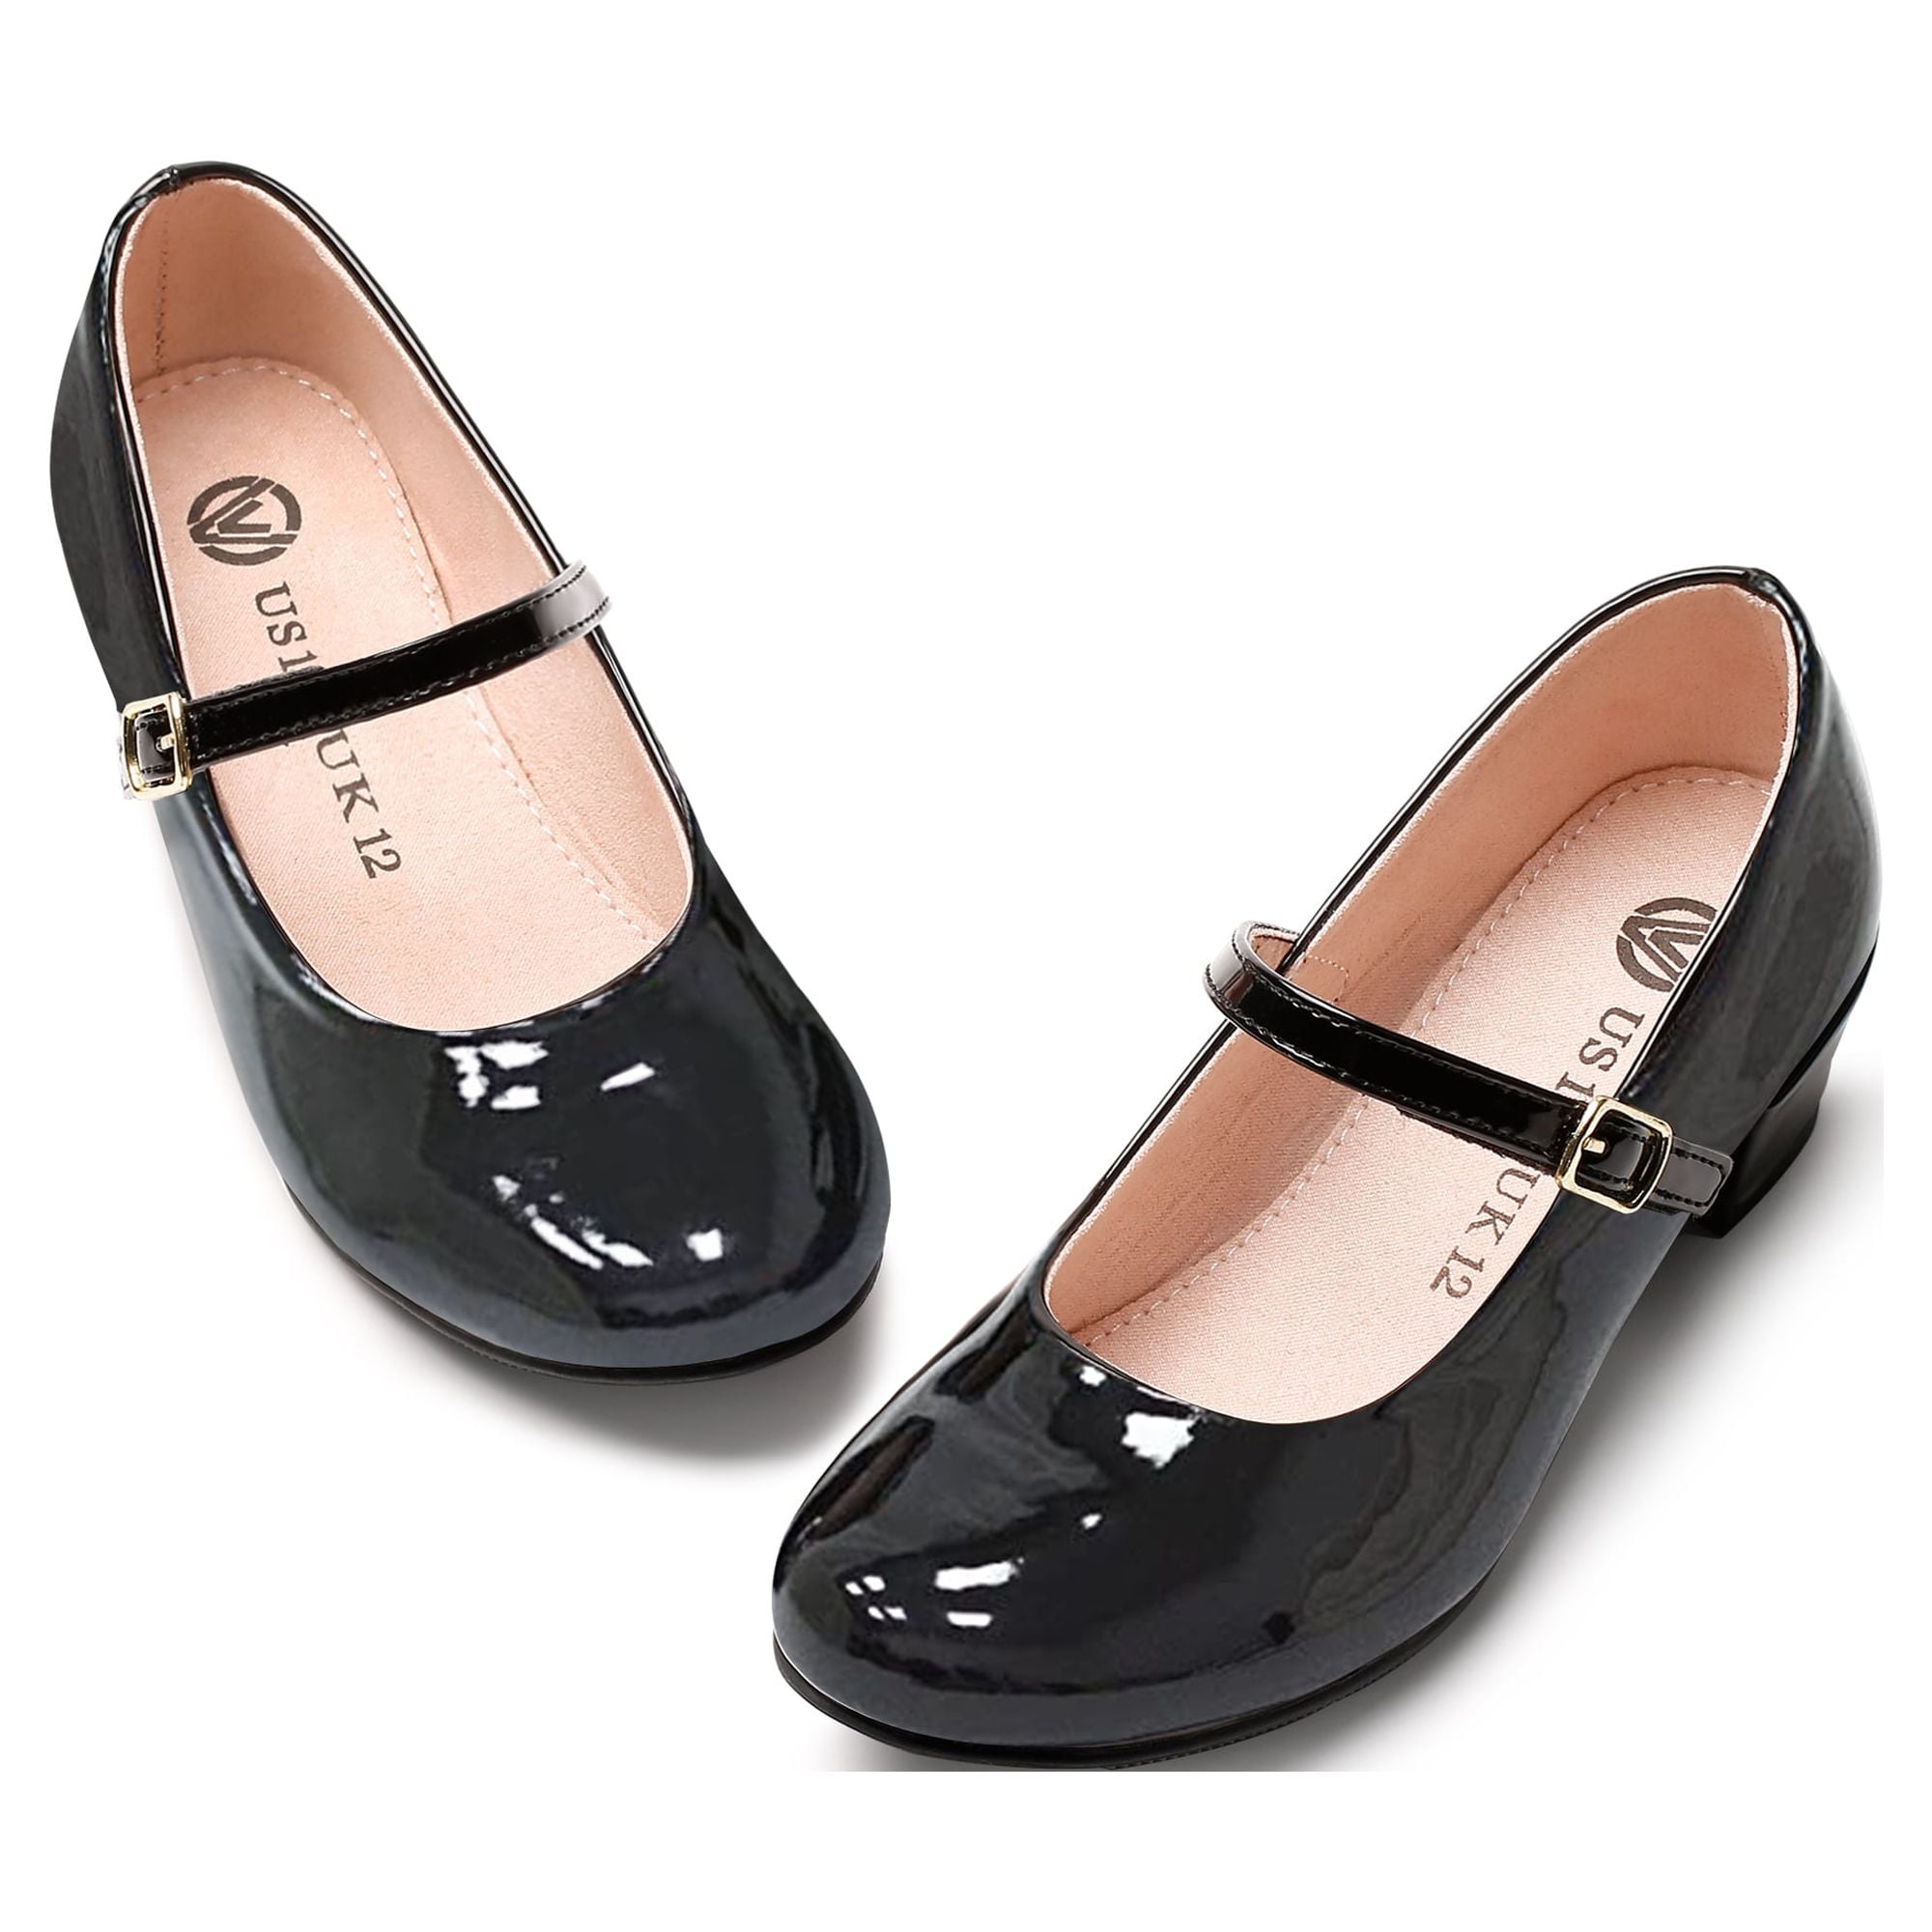 Buy Beacon Latest Comfortable Block Heel Sandal (Black -36) at Amazon.in